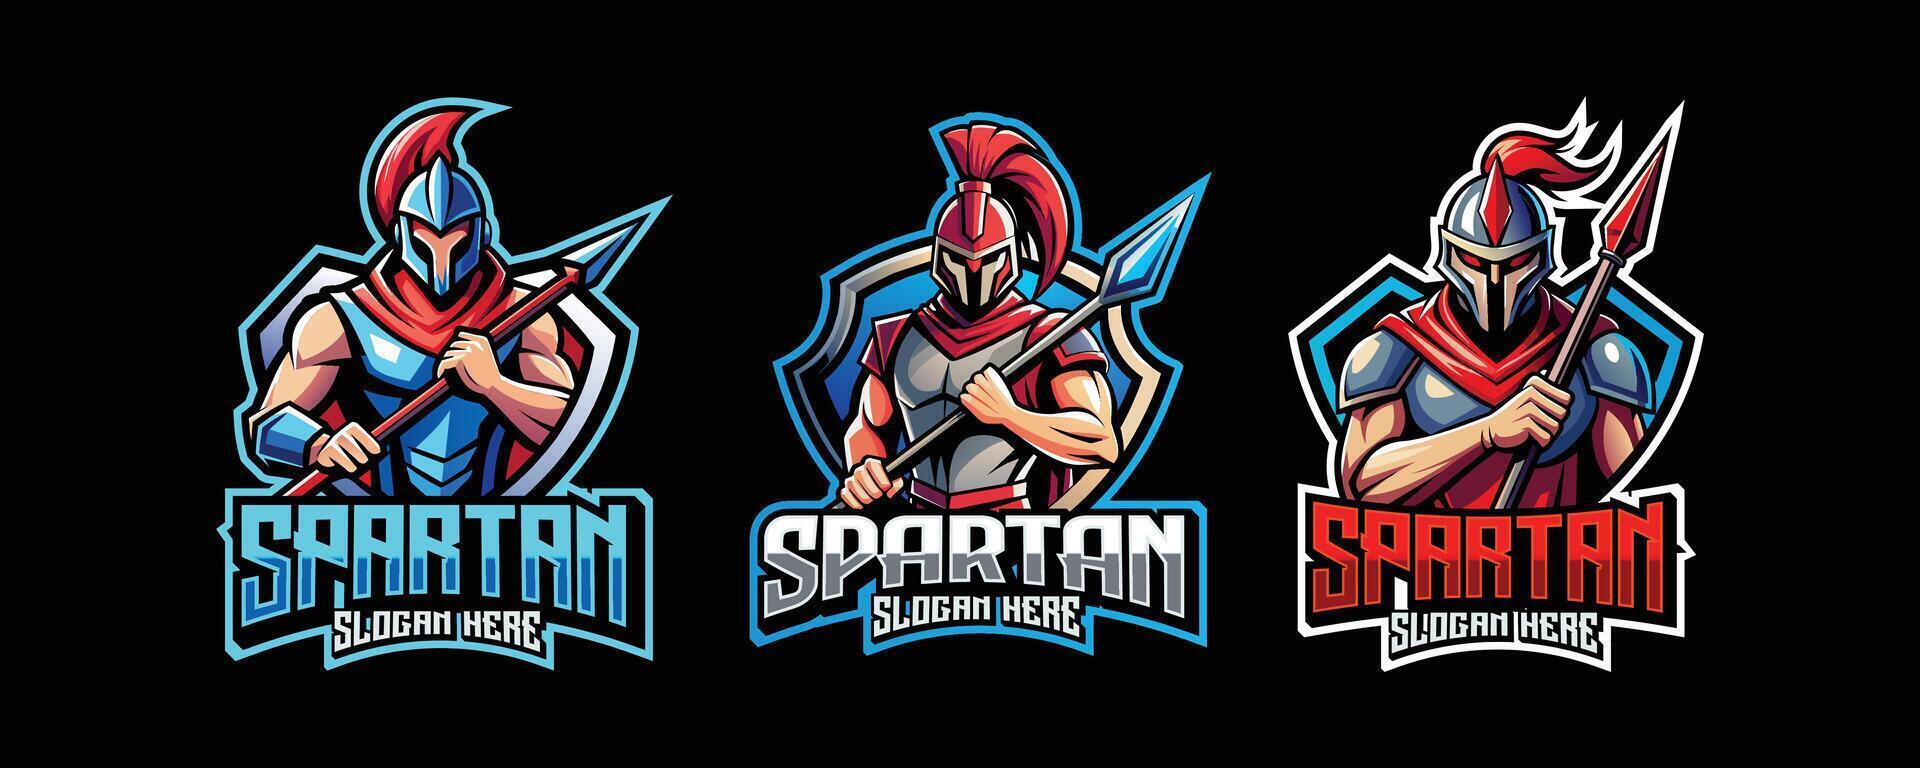 espartano esport jogos logotipo. conjunto do espartano Guerreiro mascote Projeto vetor